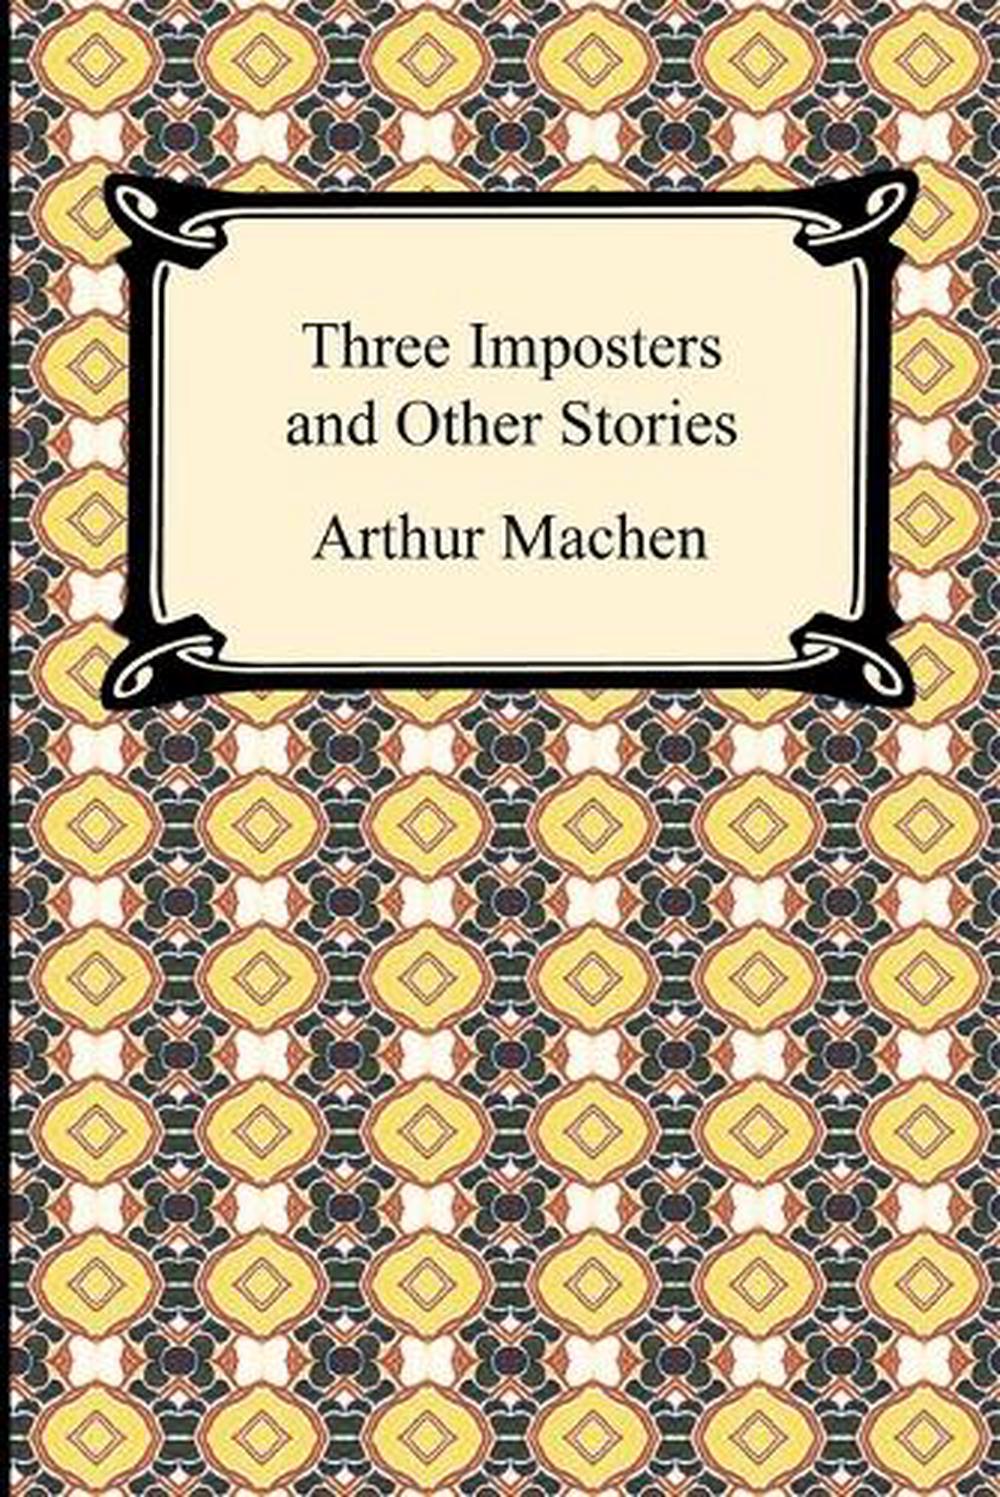 arthur machen the three imposters